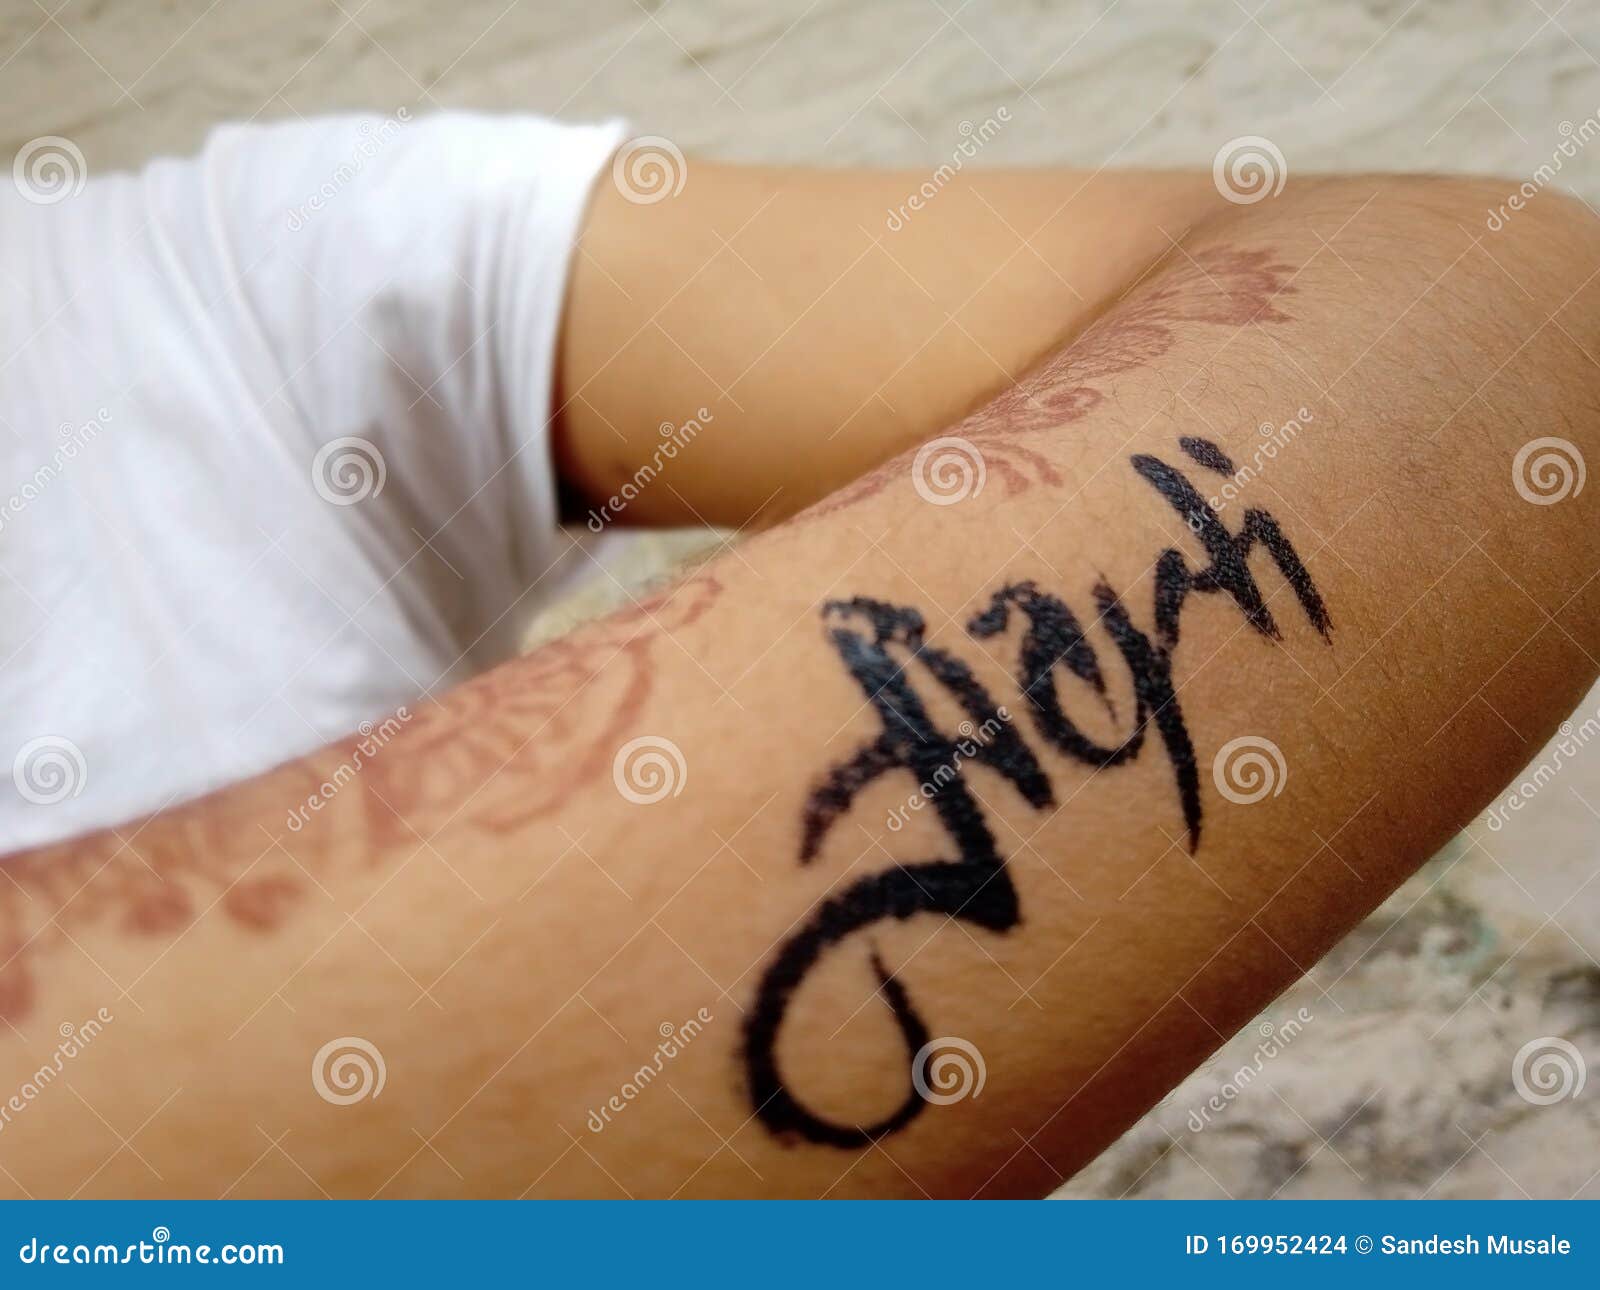 rti Name Tattoo For Hand So Beautiful Handwriting Stock Photo Image Of Hand Tattoo